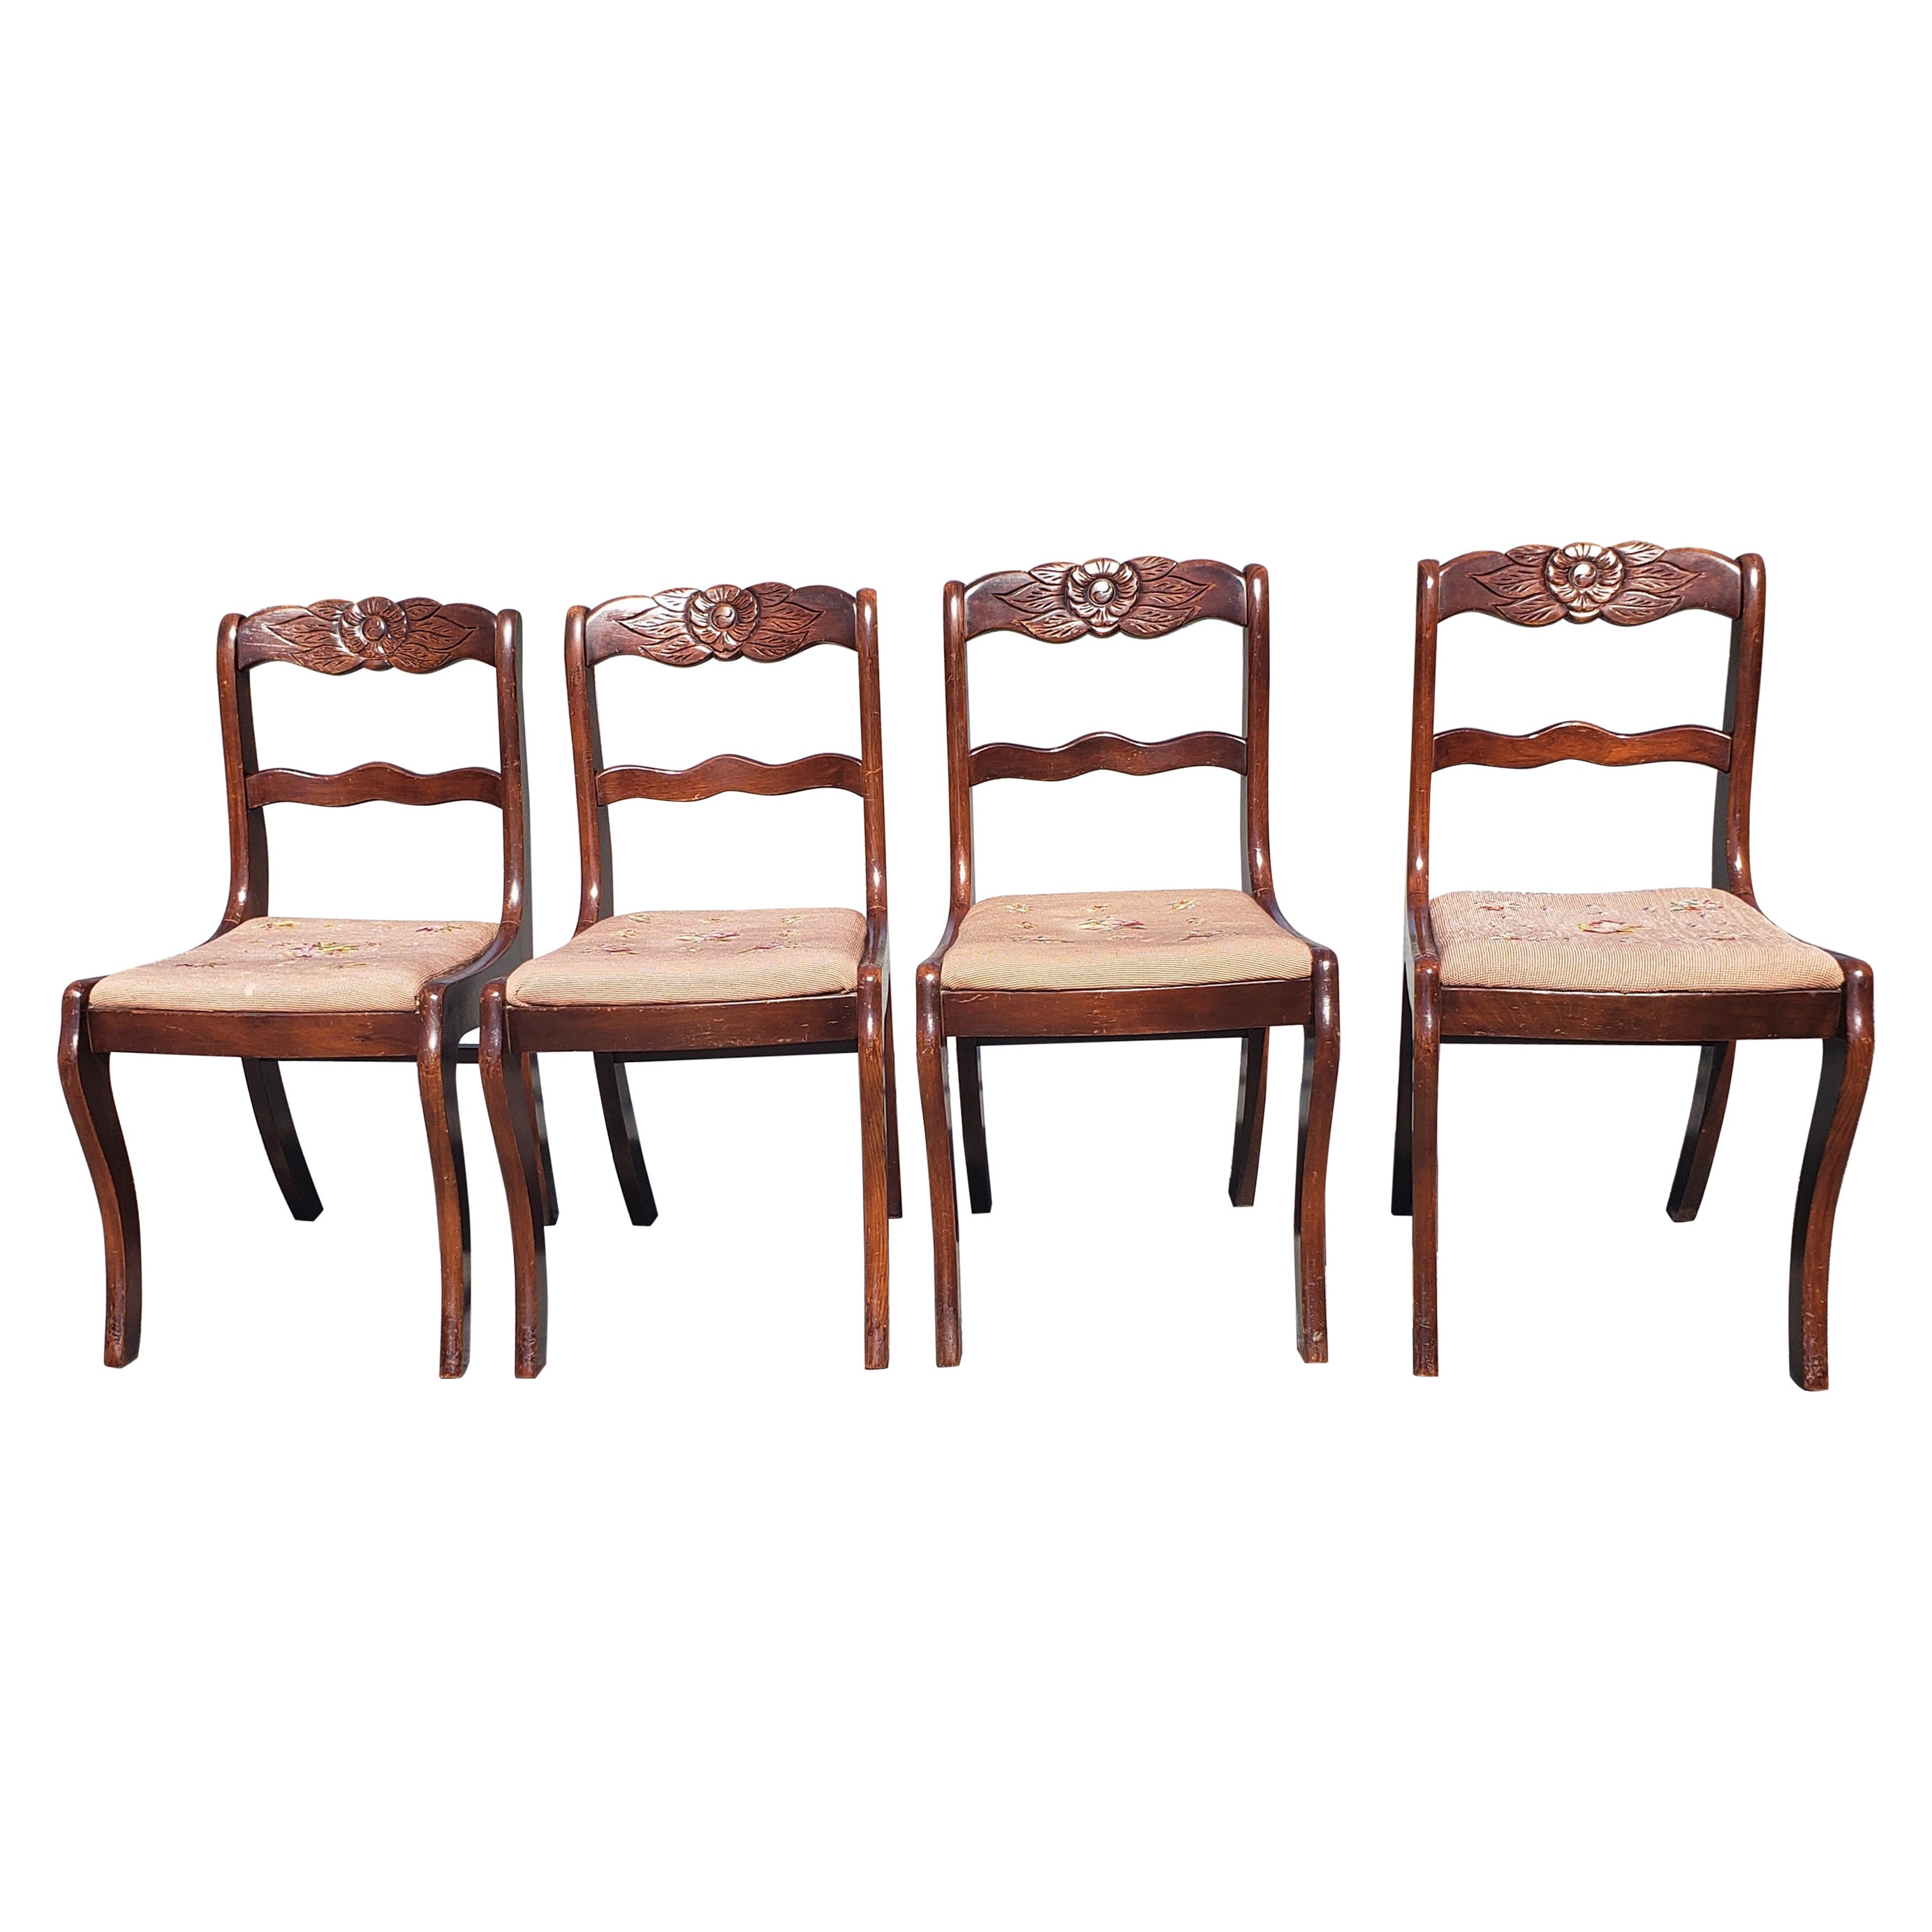 1940’s Tell City Mahogany Duncan Phyfe Rose Chair W/ Needlepoint Seat, Set of 4